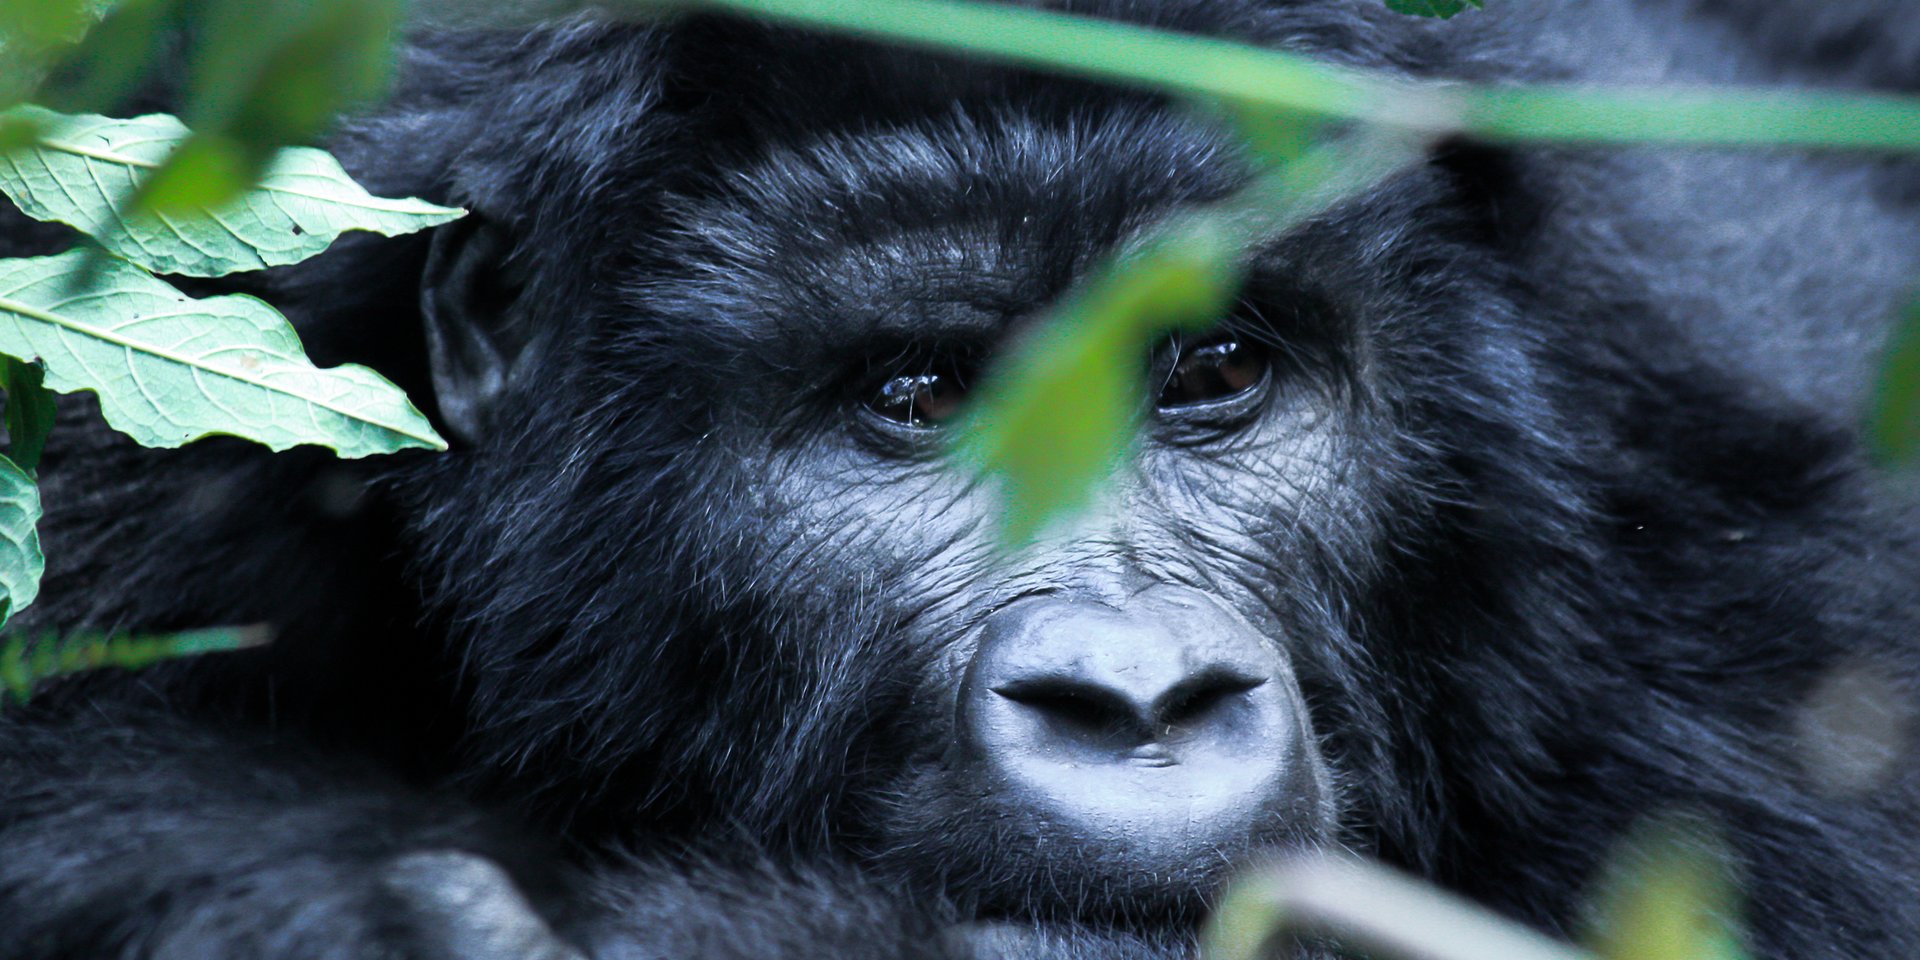 rwanda gorilla trekking tours